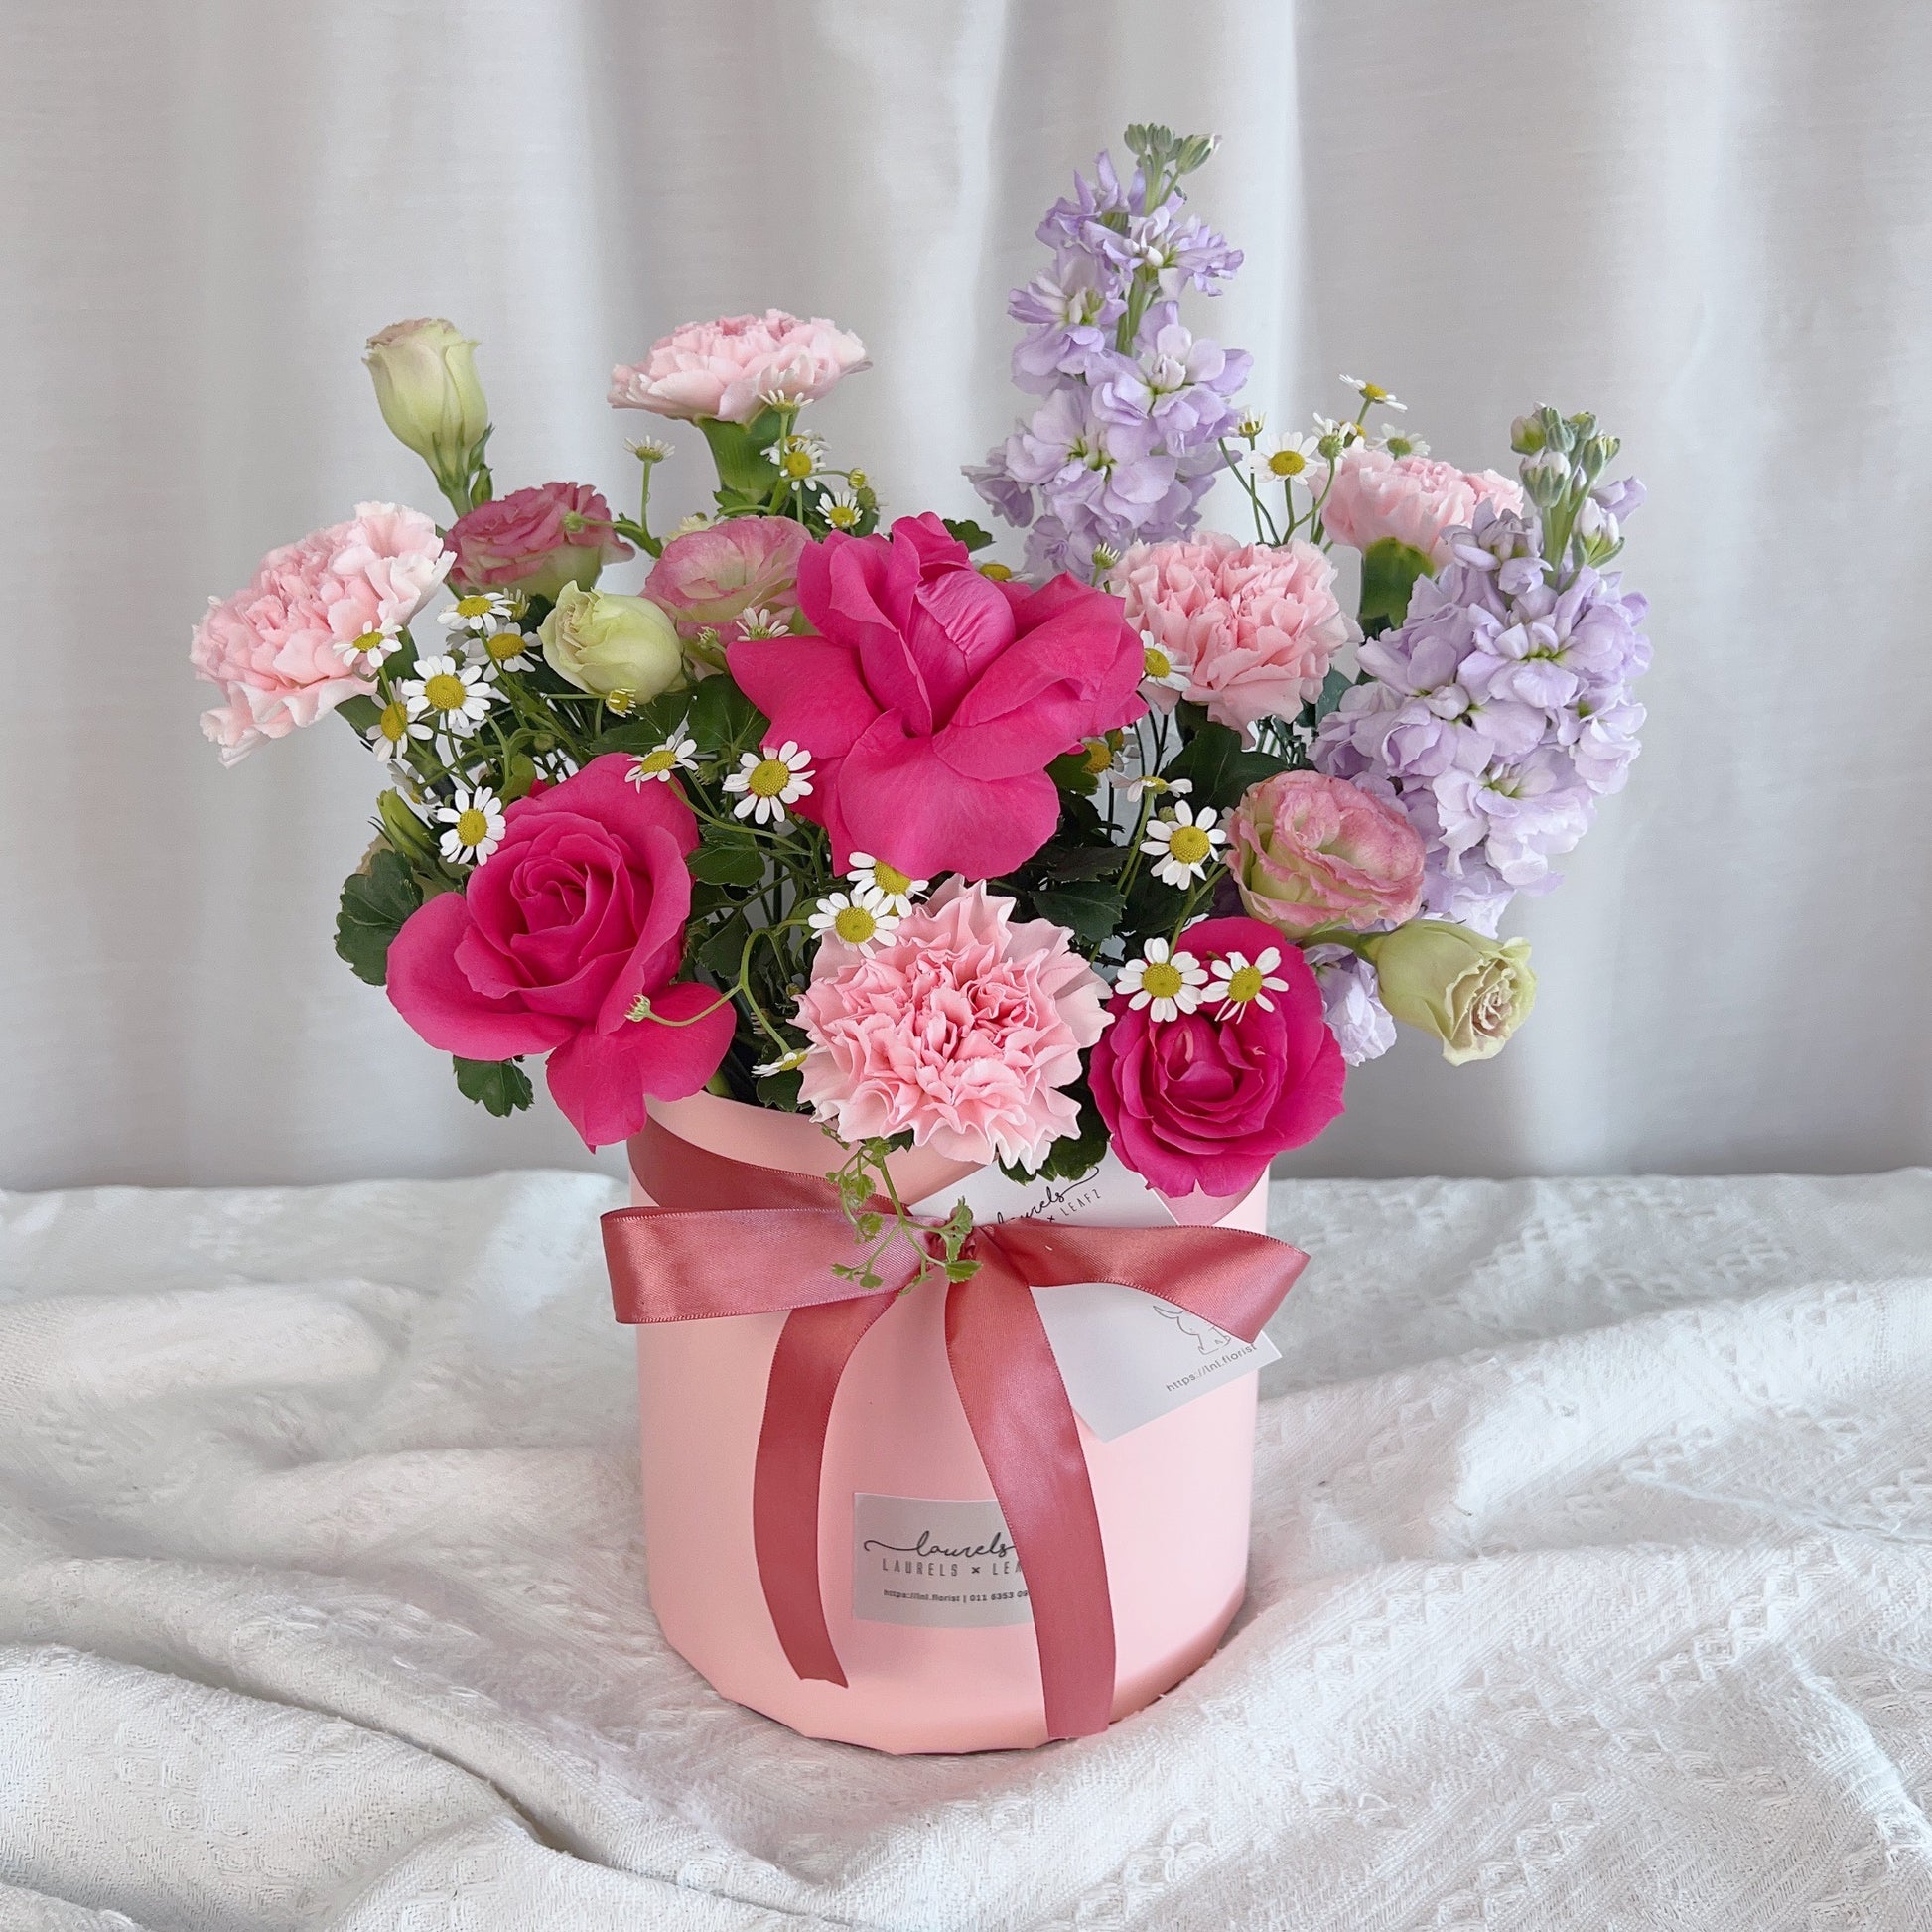 Callie Flower Box | Remarkable Flower Arrangement For Mother's Day 